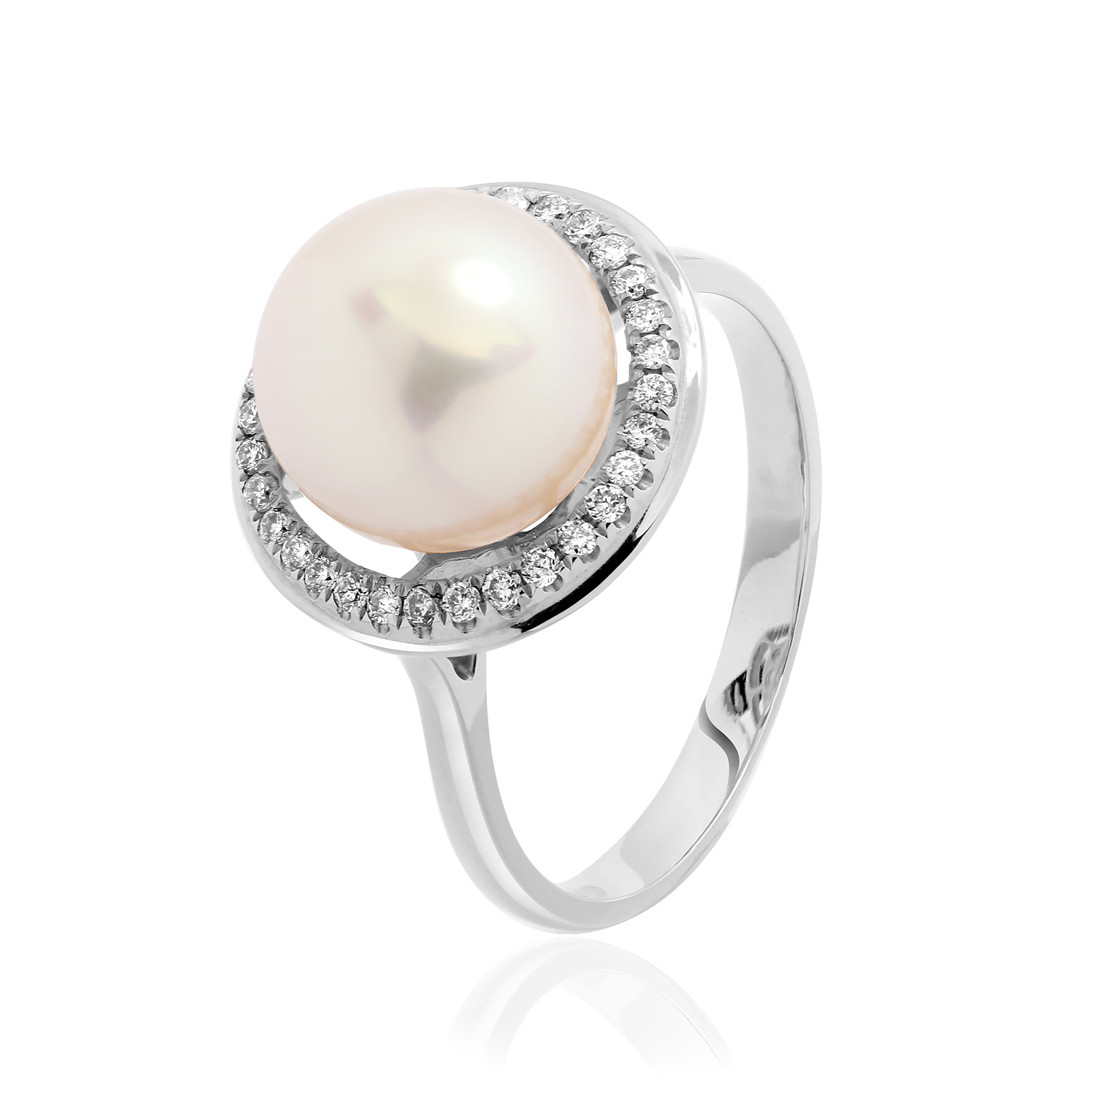 Prsteň Petals, biele zlato, sladkovodná perla, diamant.